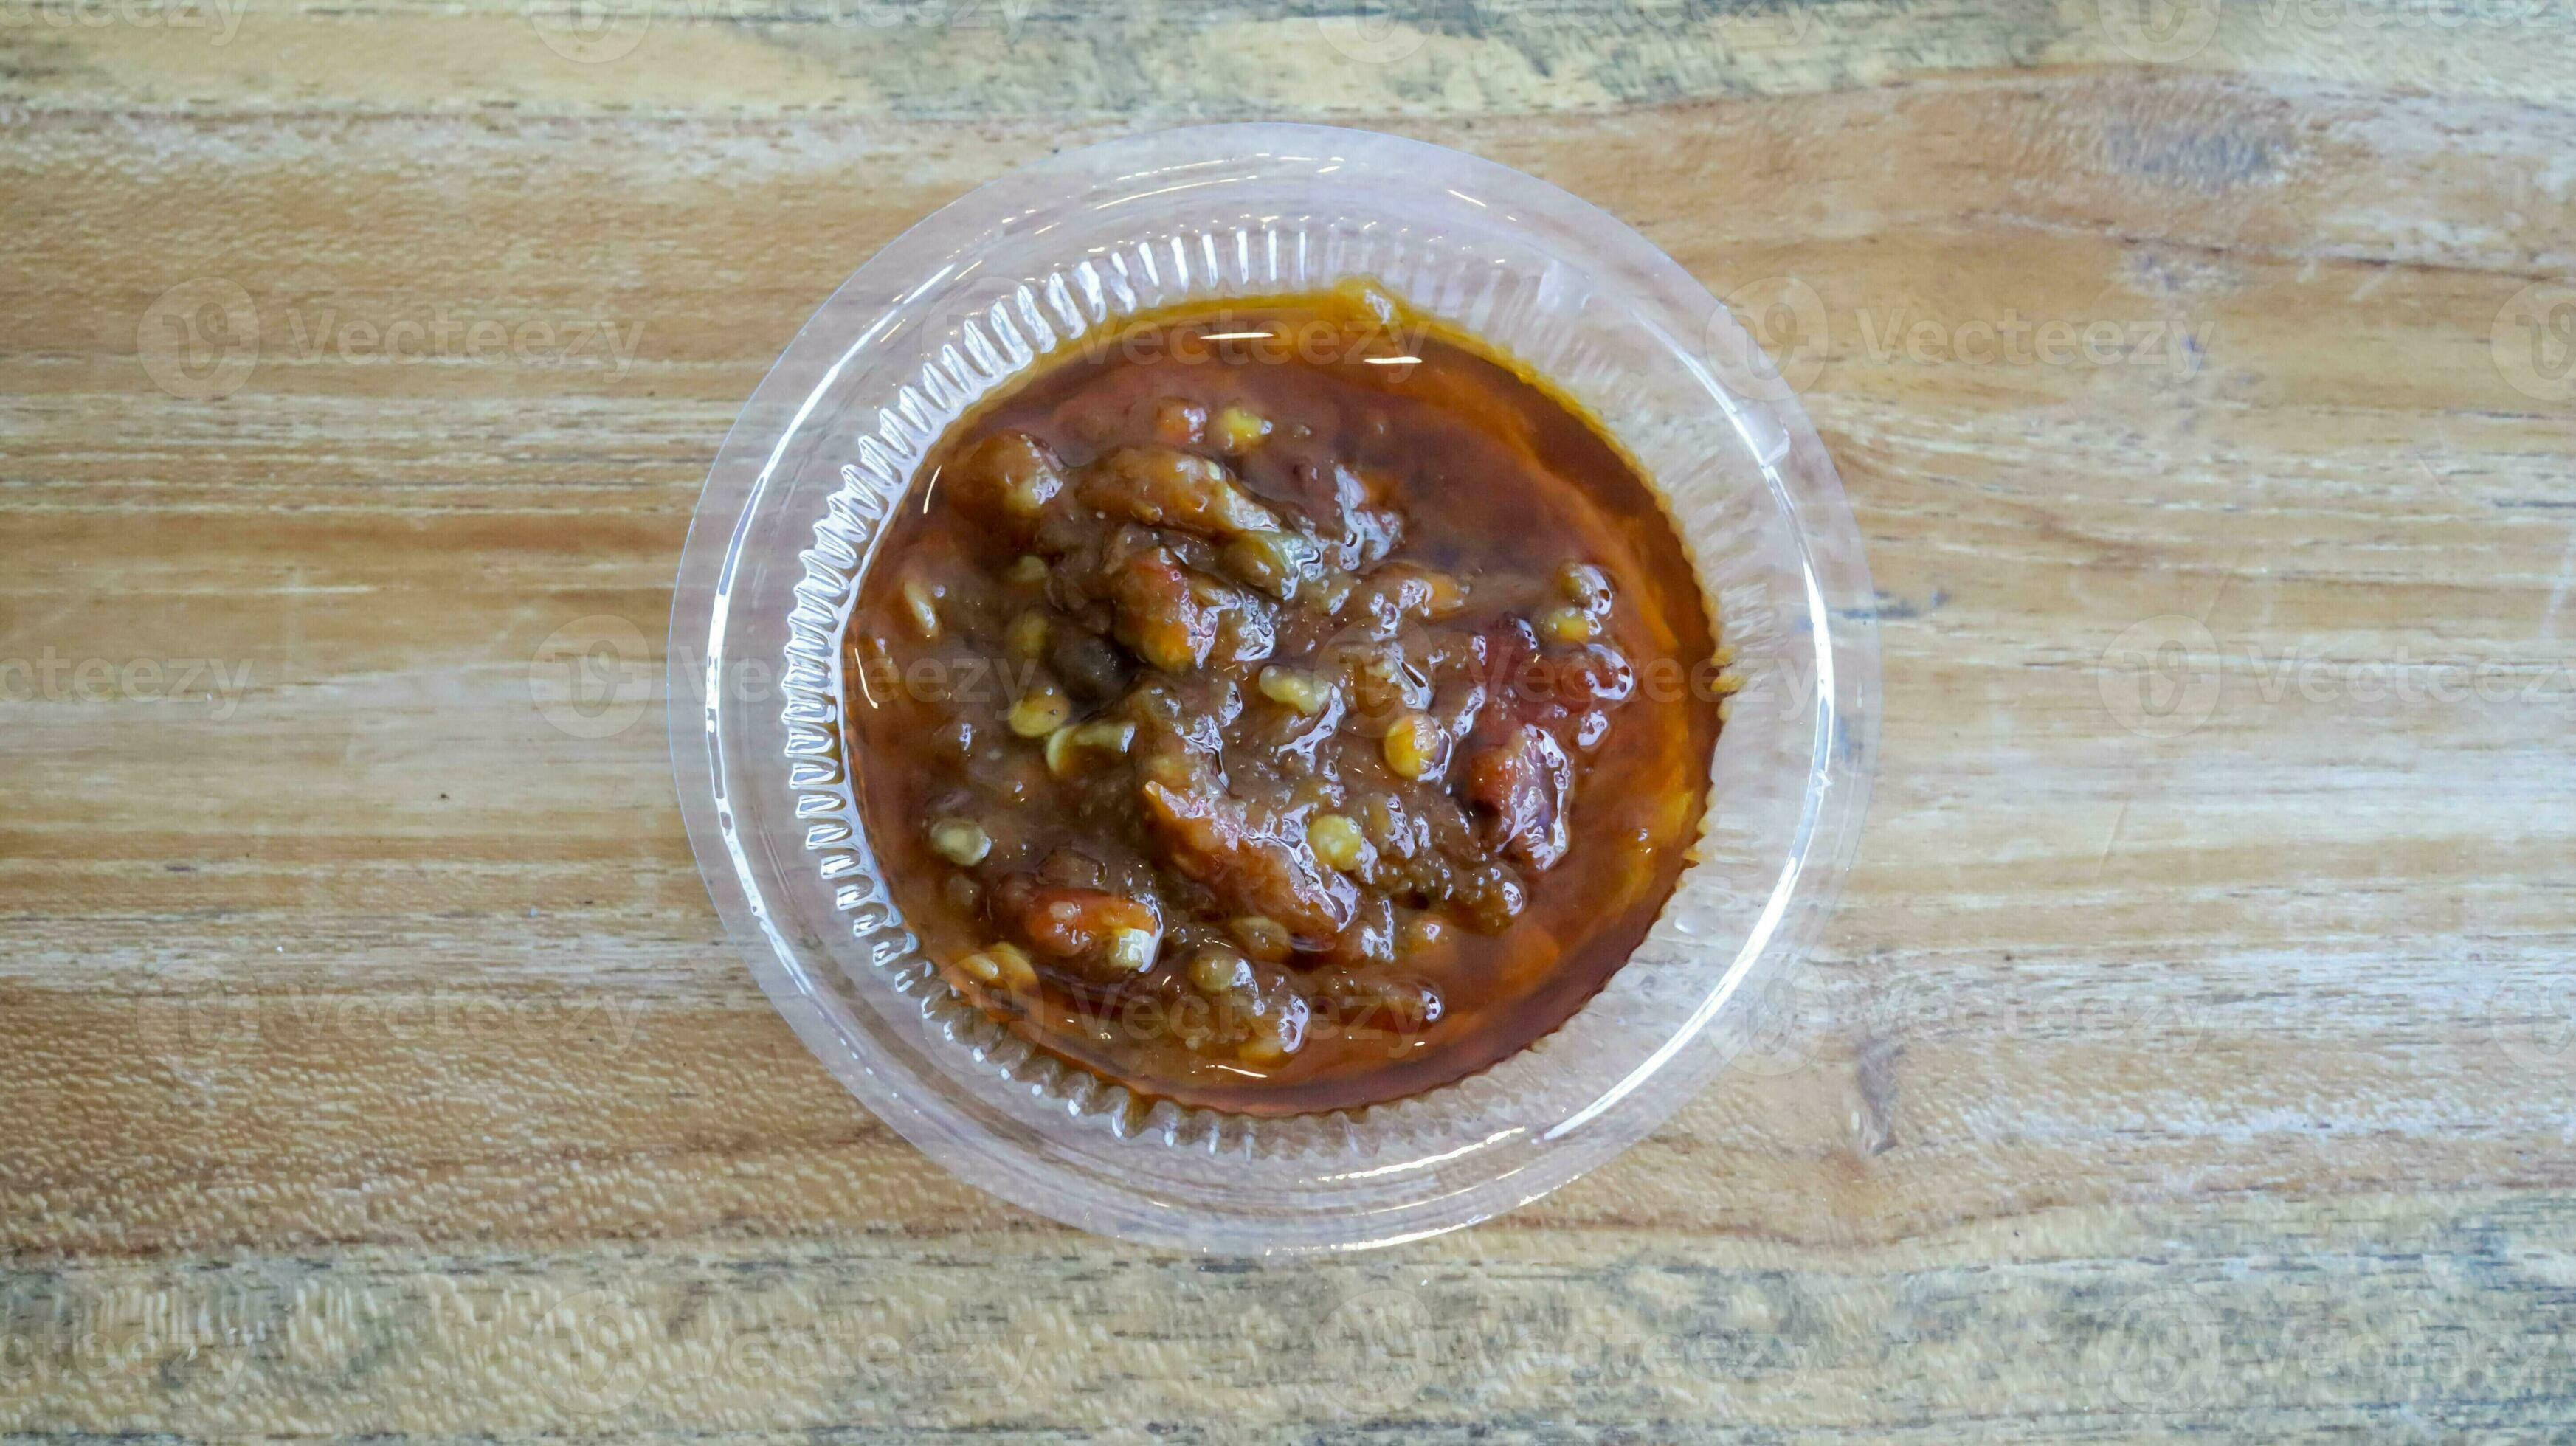 Spicy Garlic-Shallot Sauce